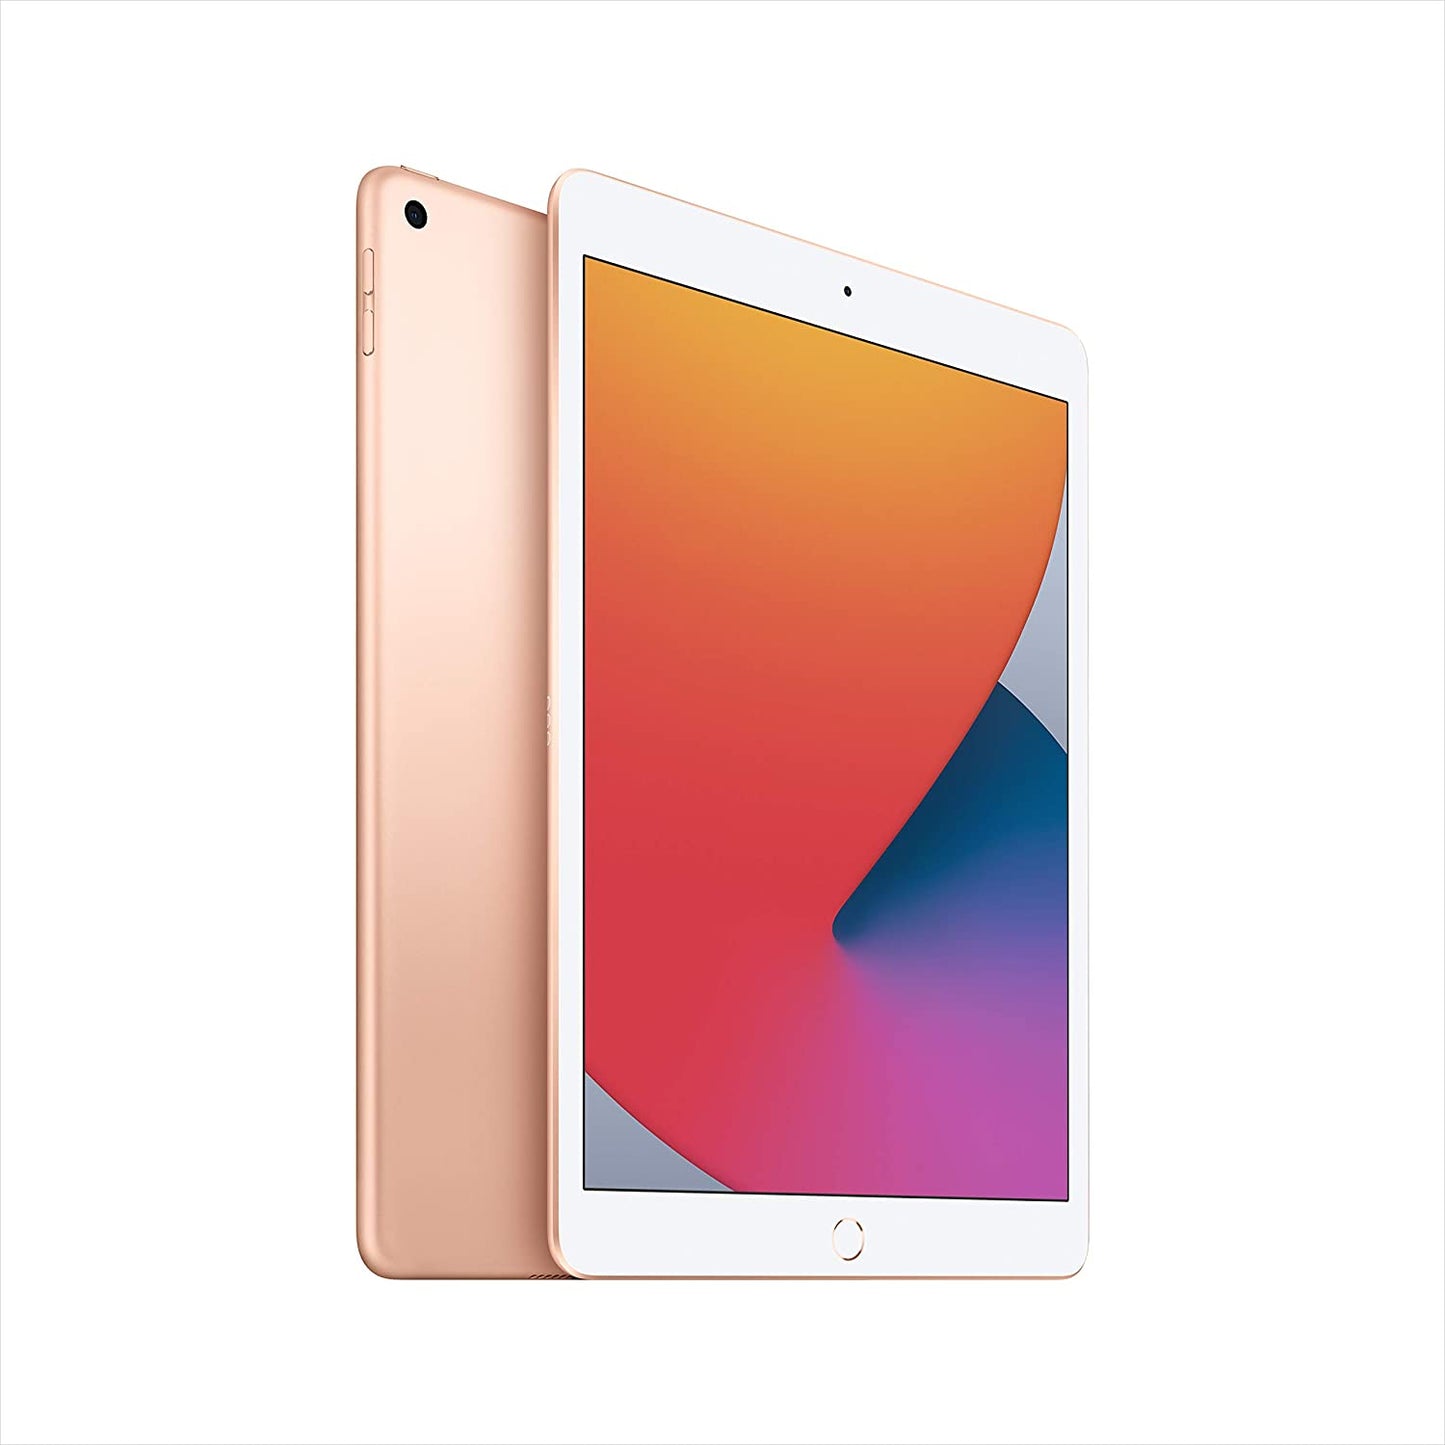 (Open Box) Apple 10.2-inch iPad Wi-Fi 32GB - Gold (Fall 2020) 8th Gen